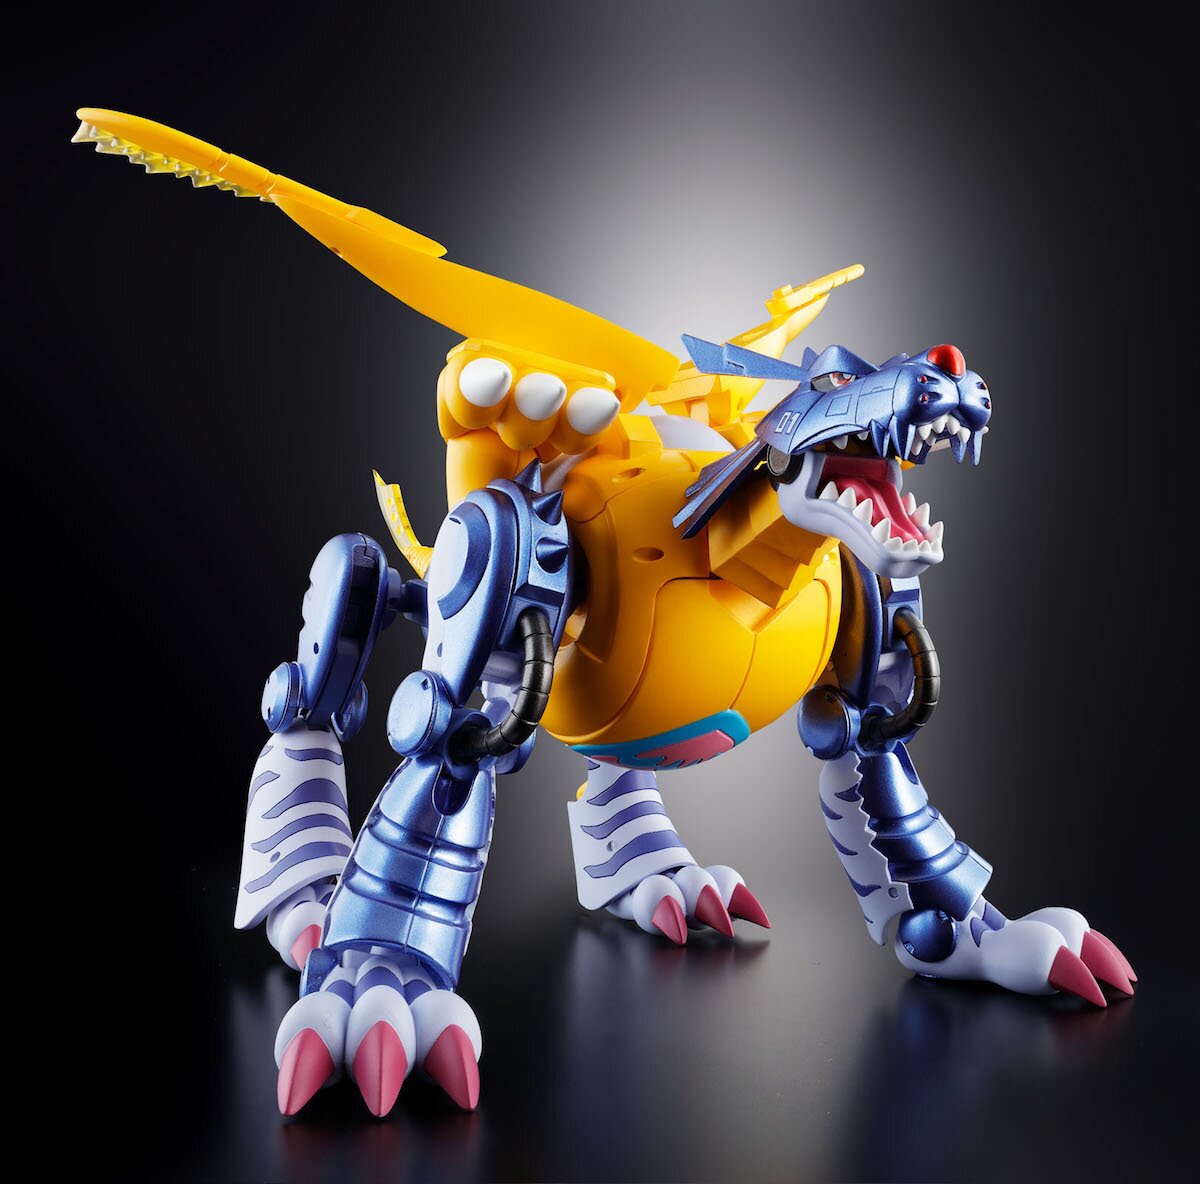 Boneco Digimon, Metal-garurumon Original Bandai Digivolving